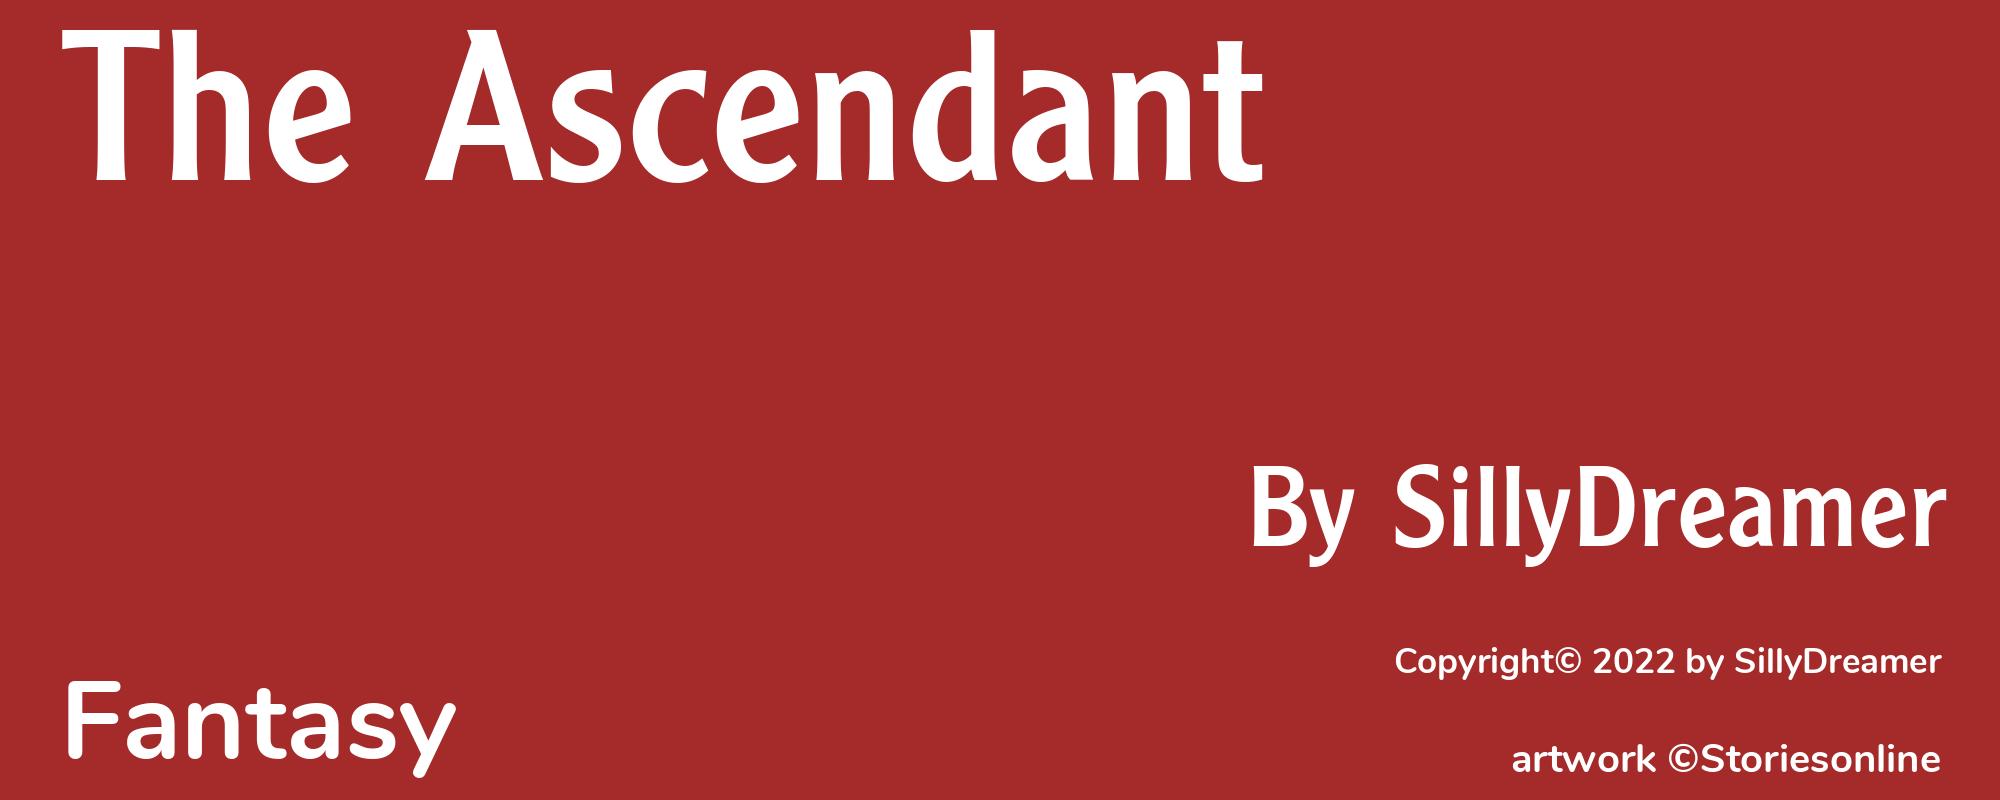 The Ascendant - Cover